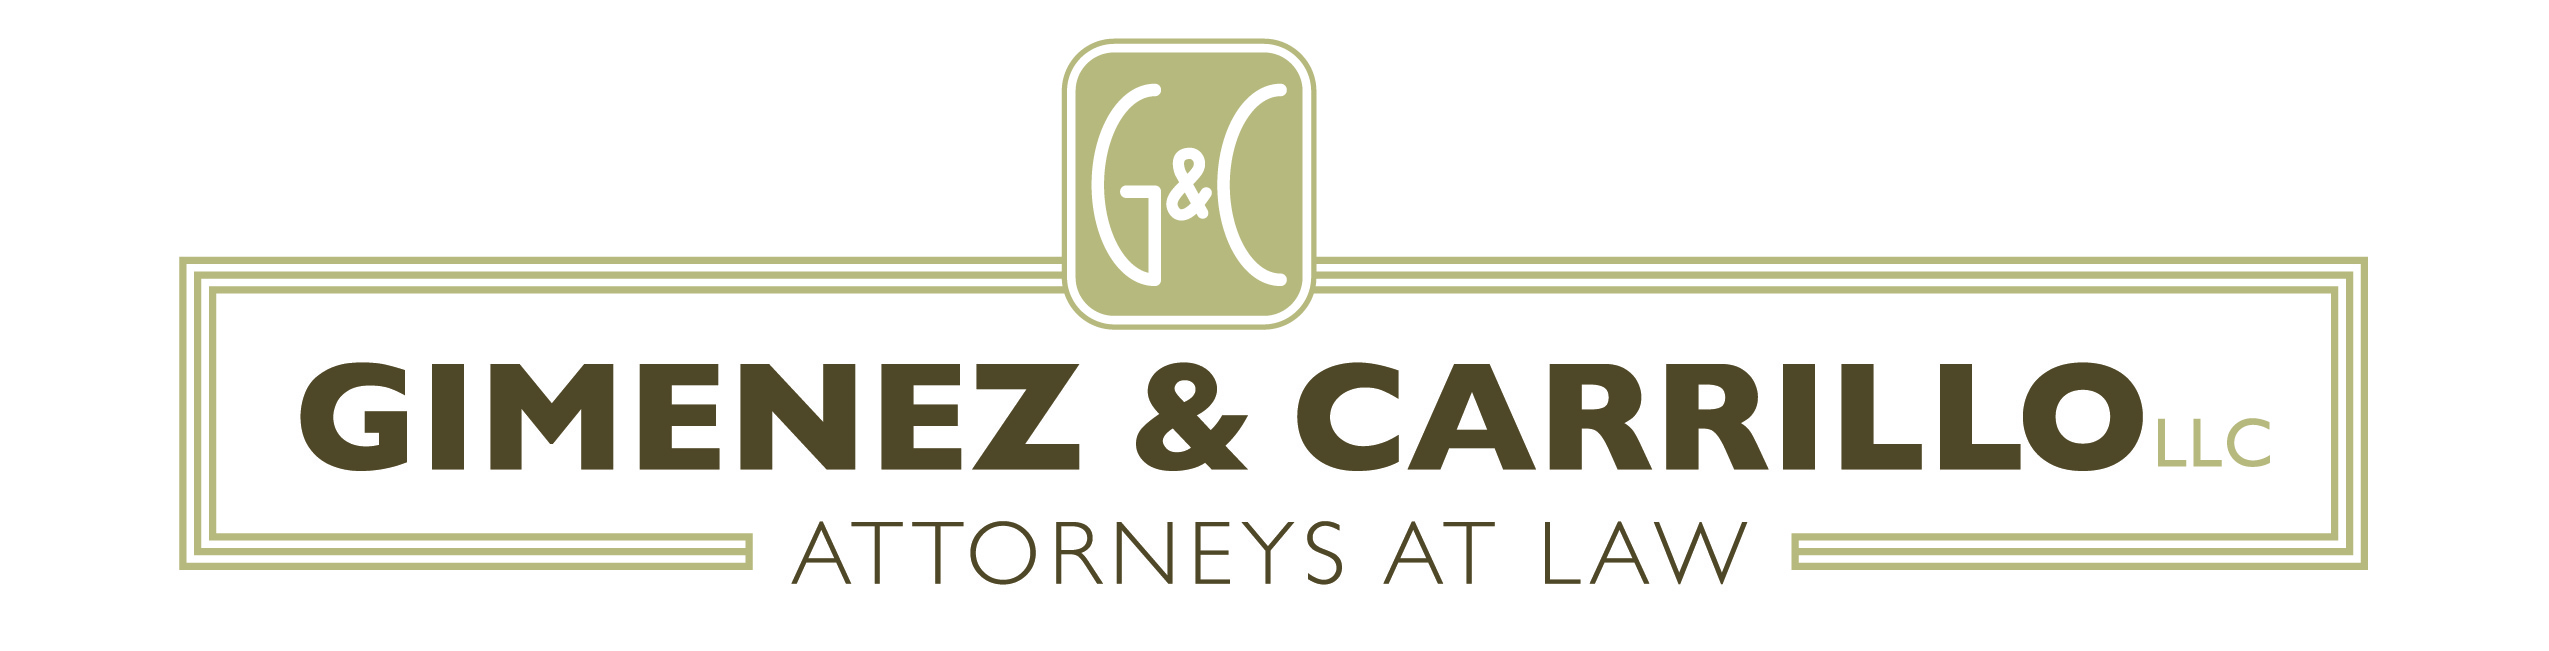 Gimenez & Carrillo LLC